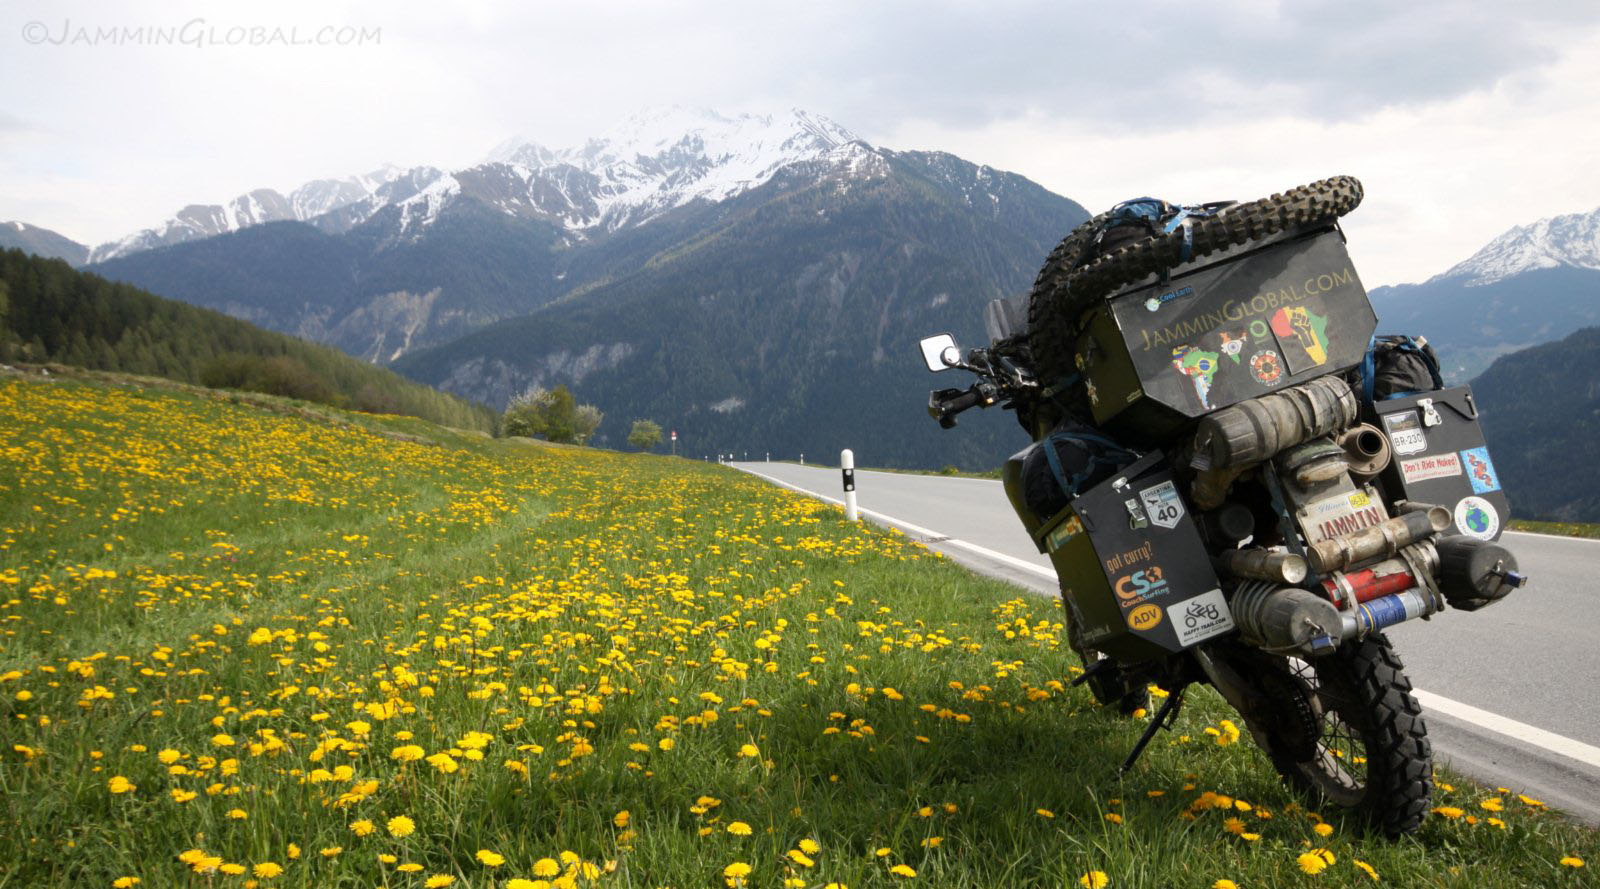 sanDRina riding across the Alps in Switzerland